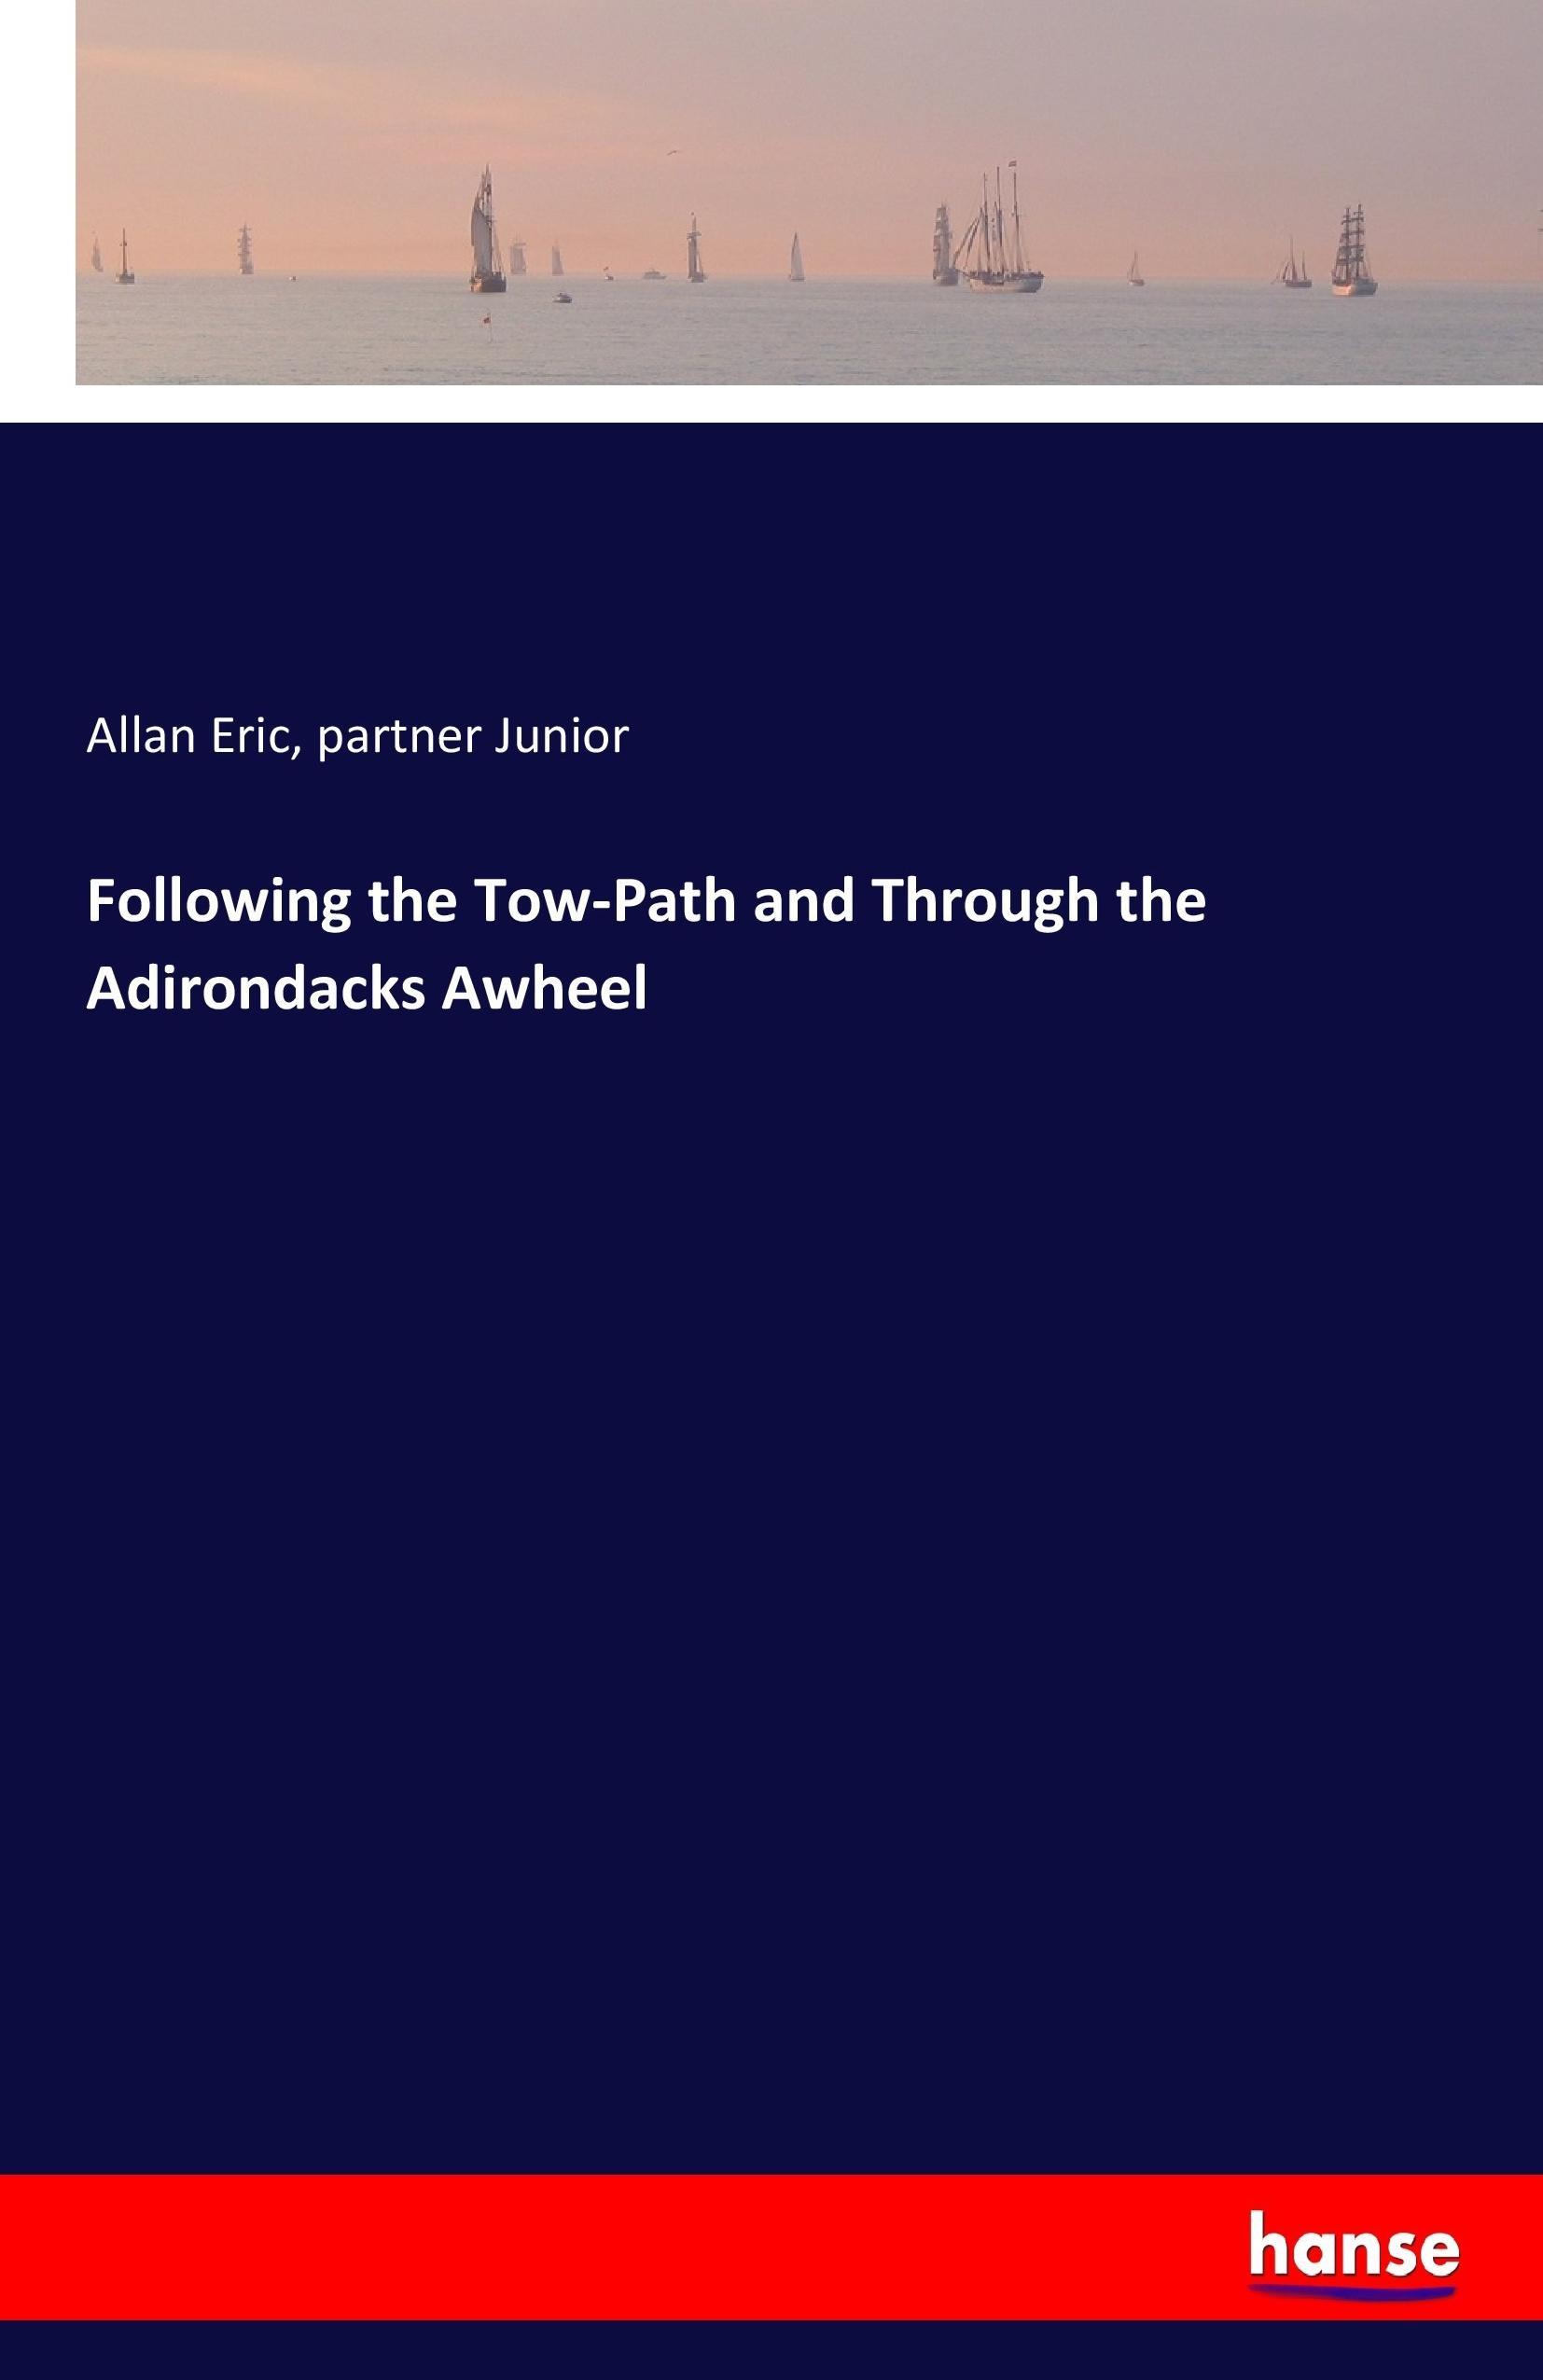 Following the Tow-Path and Through the Adirondacks Awheel - Eric, Allan Junior, partner